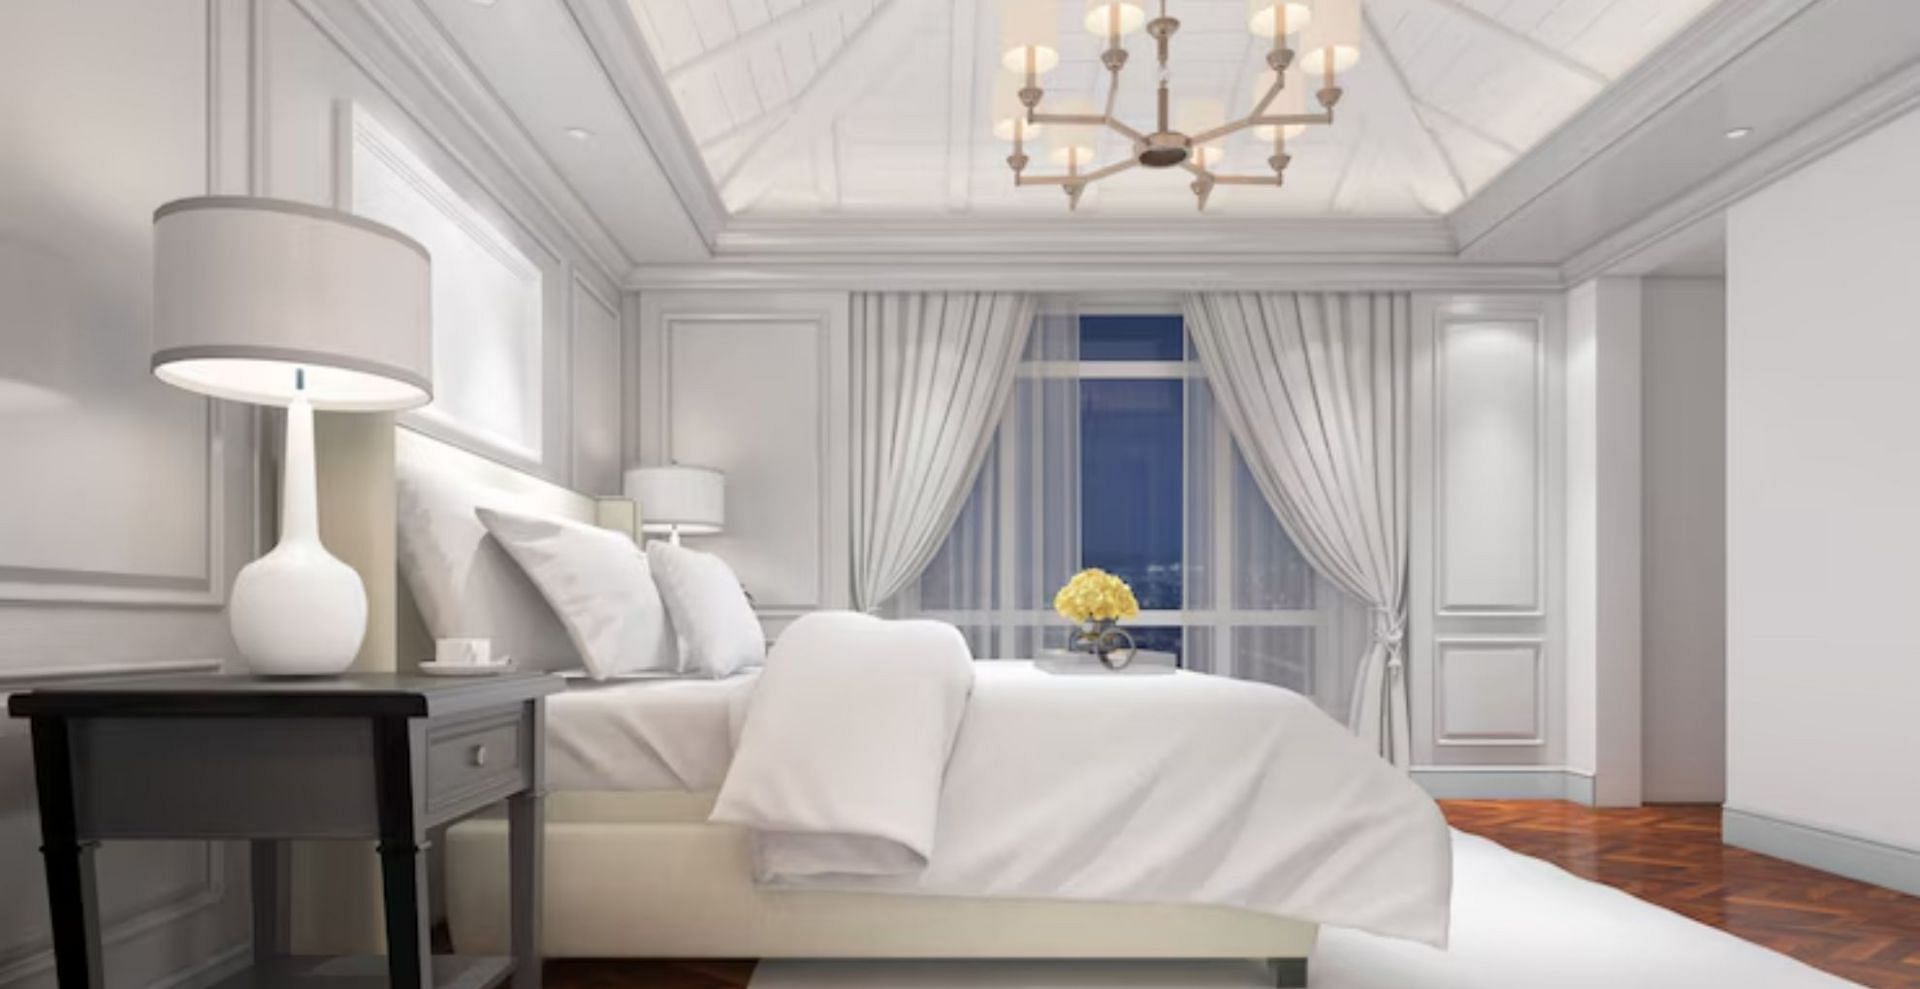 10 Cozy bedroom decor ideas to explore